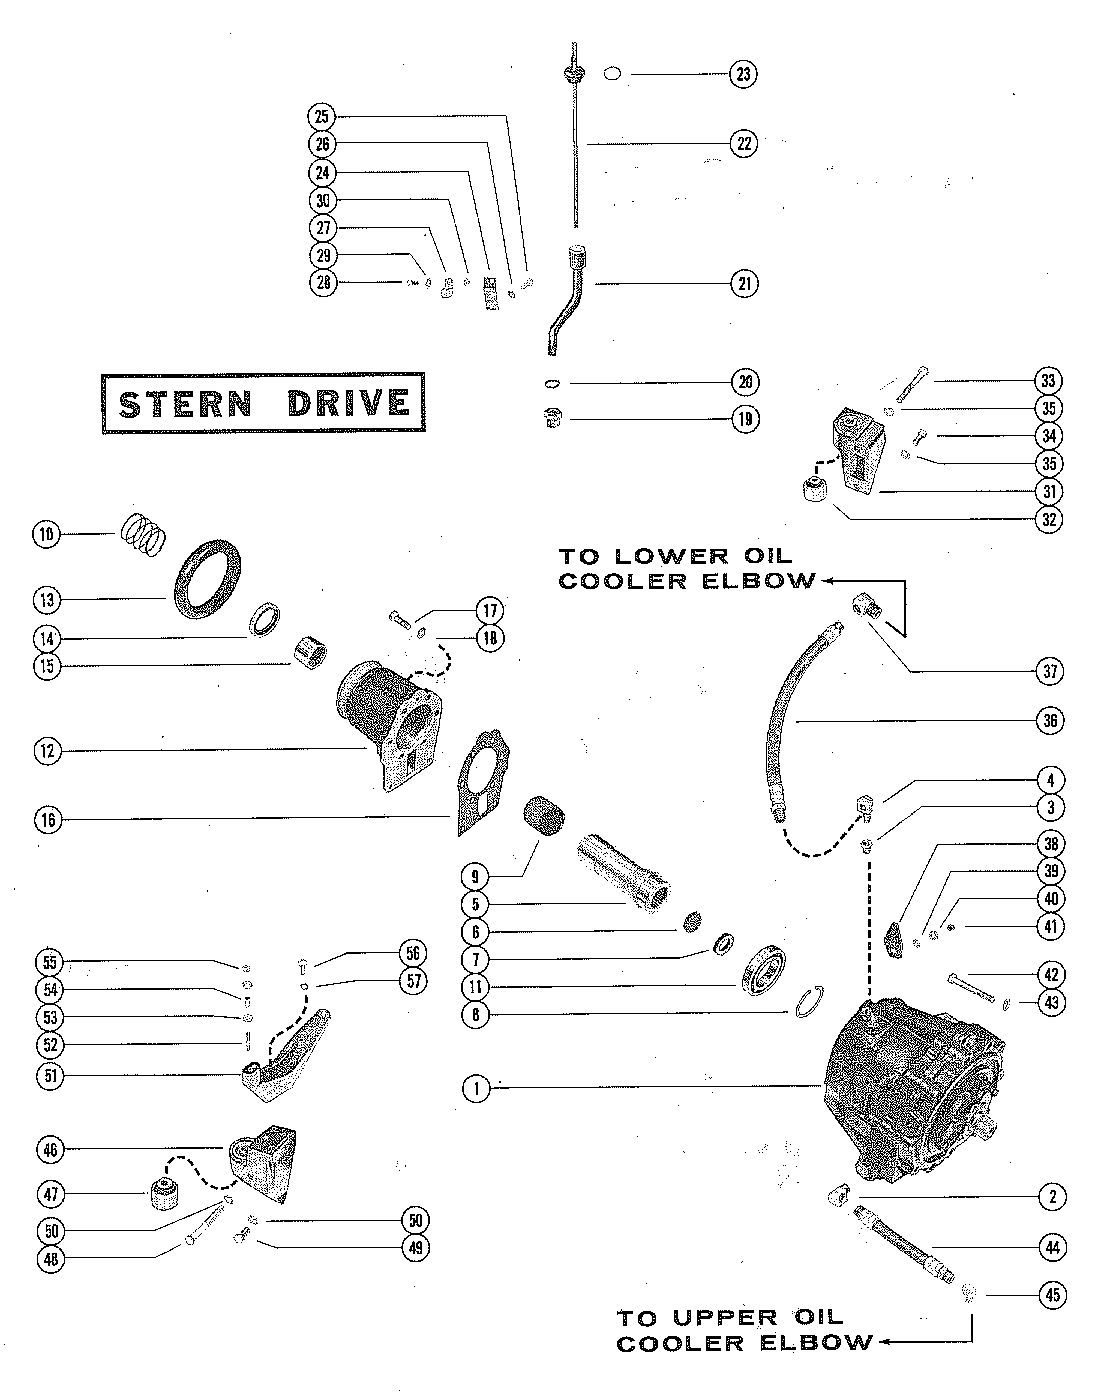 MERCRUISER 270 ENGINE TRANSMISSION ASSEMBLY (STERN DRIVE)